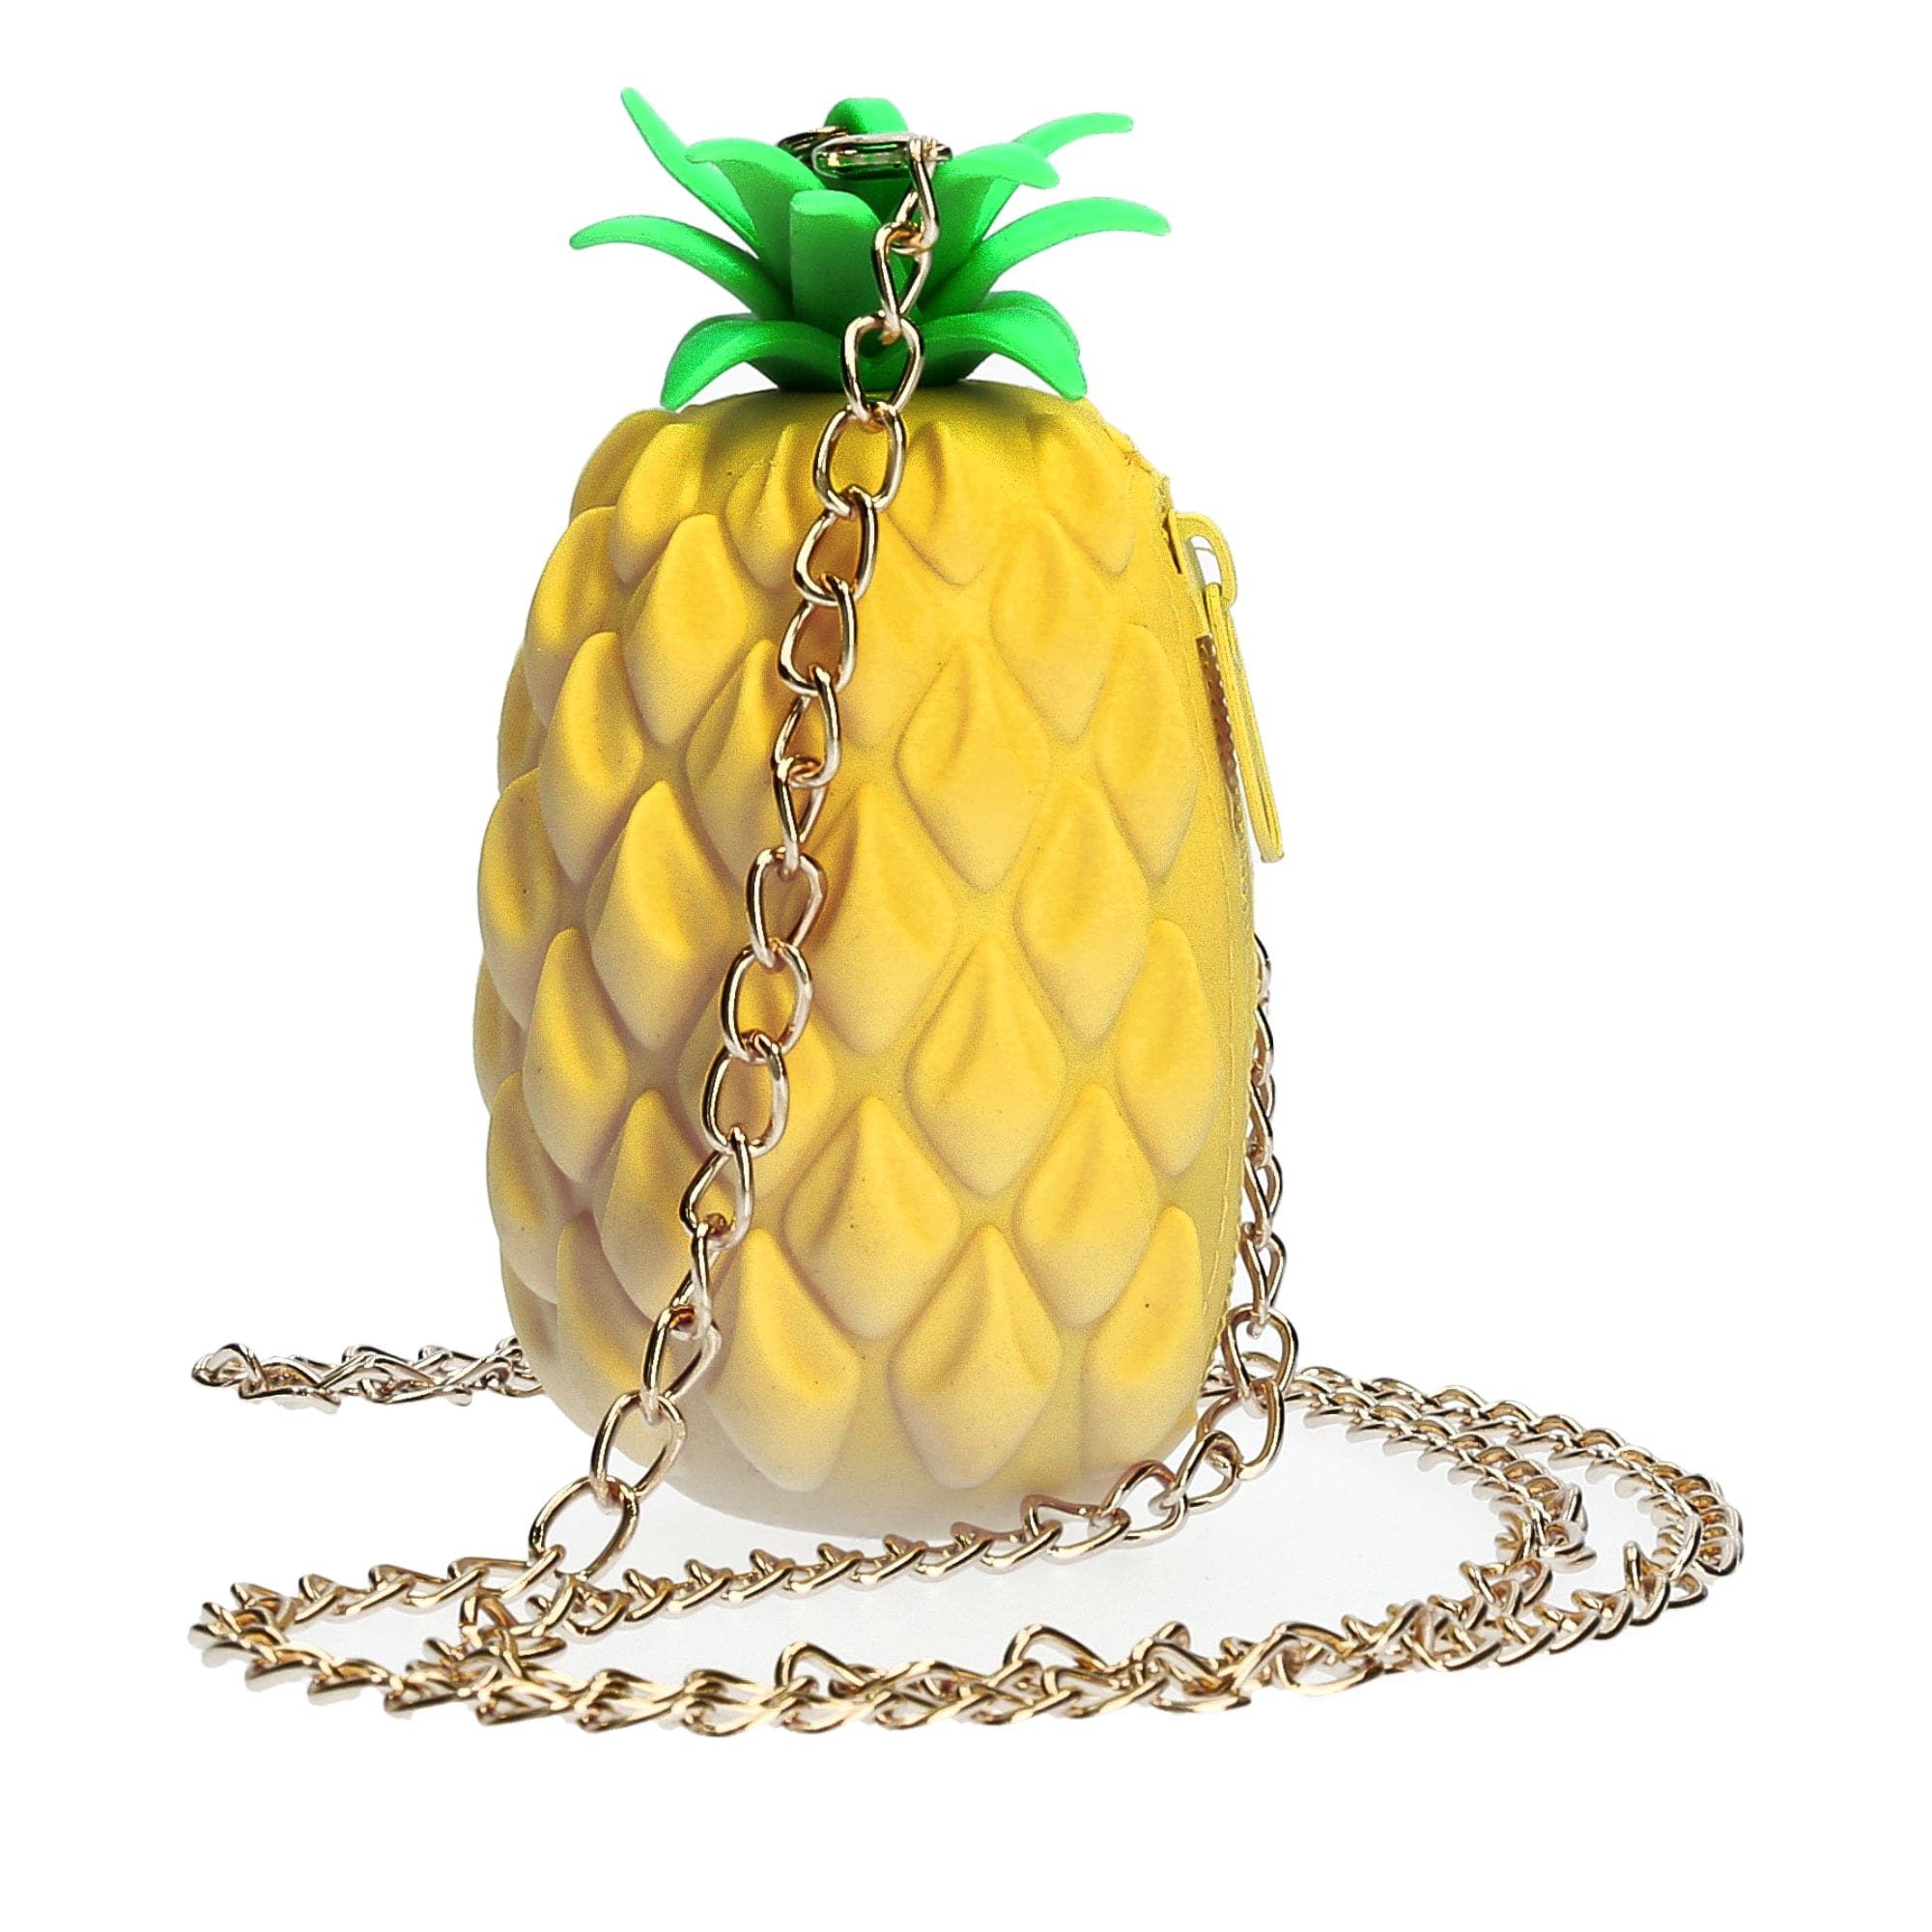 Esclusiva borsa Mini Pineapple - Borsa